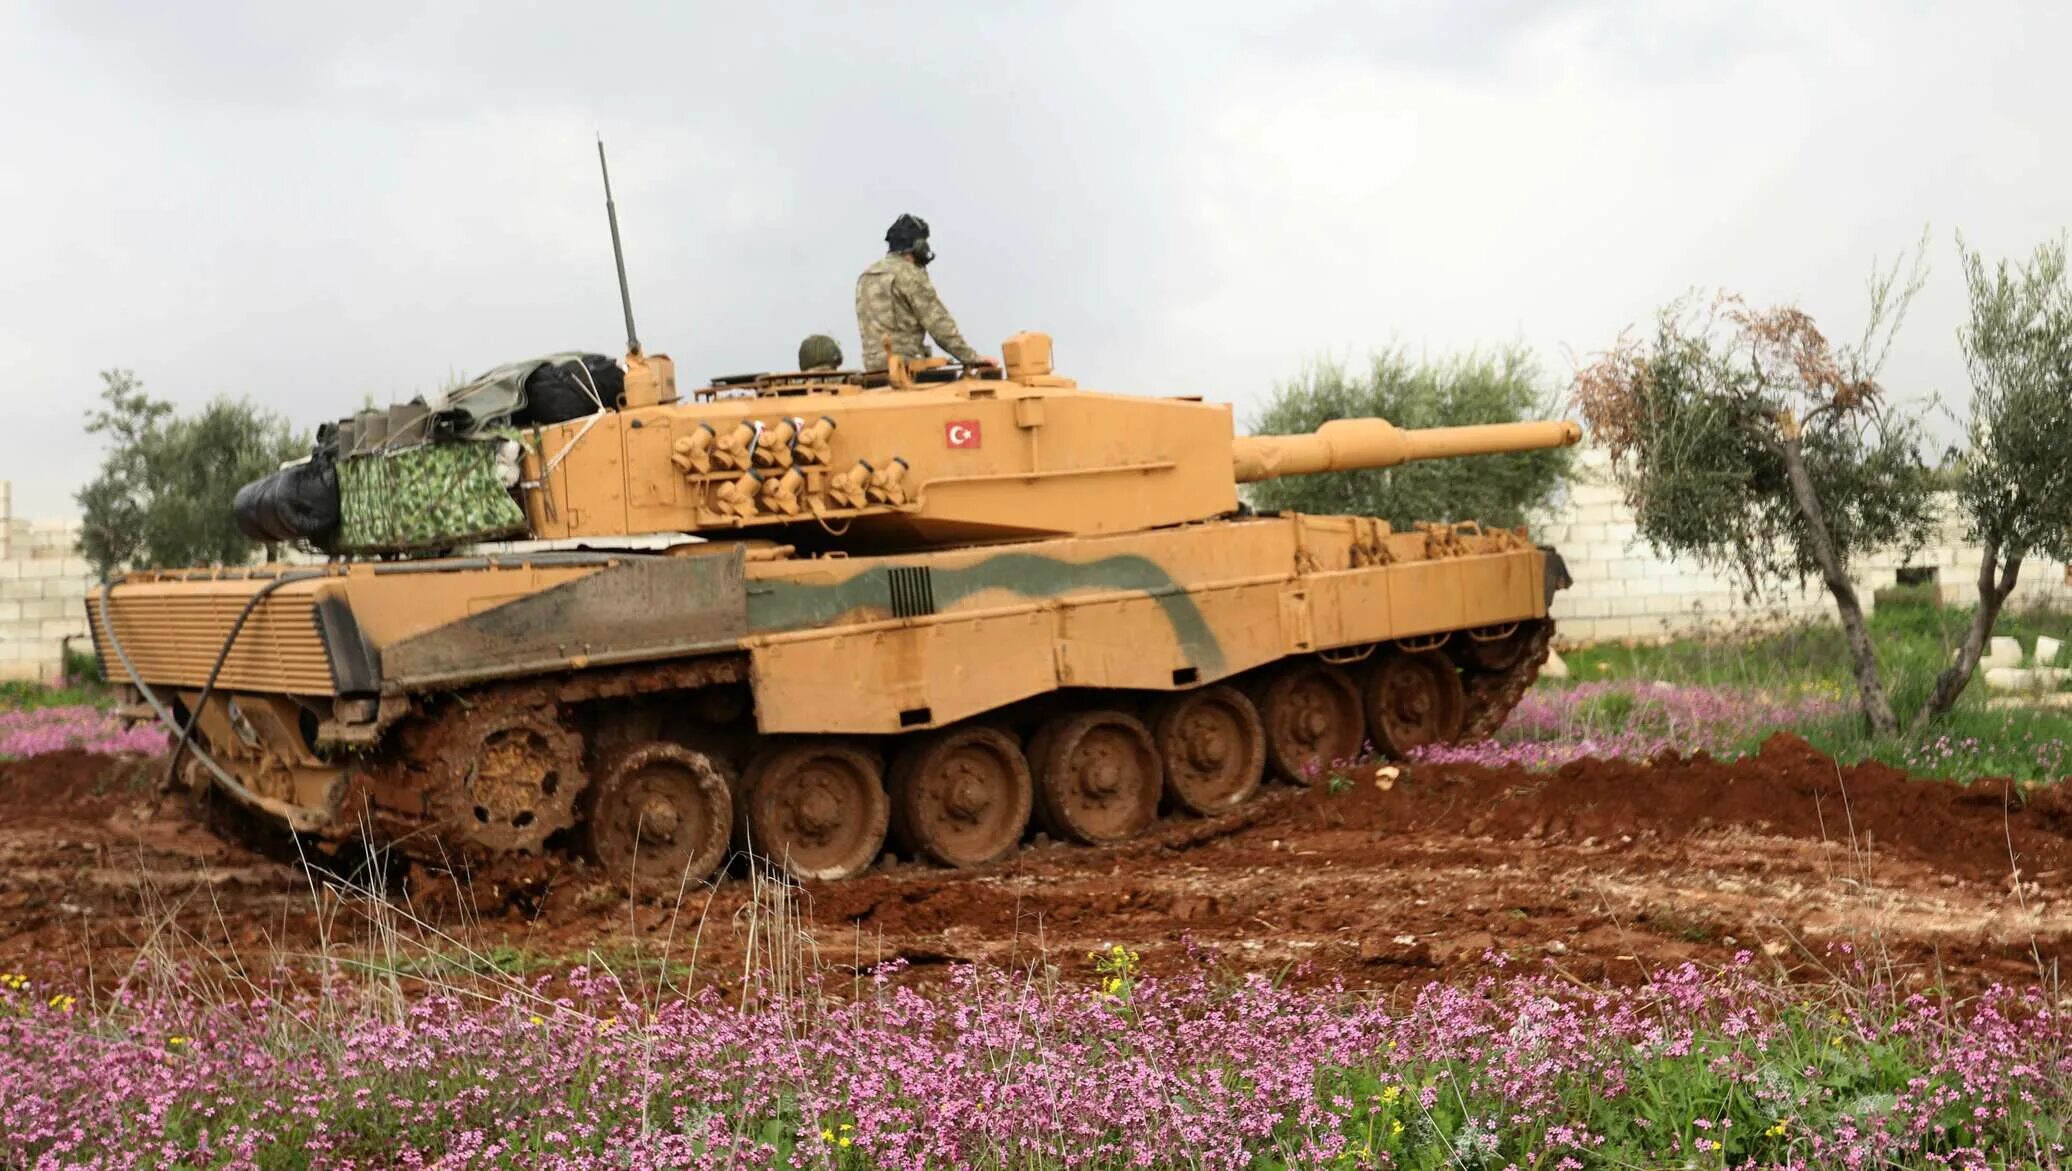 2 2 4 turkey. Турецкий леопард 2а4. M60 турецкий танк. Leopard 2a4. Турецкие "леопард 2а4" подбитый.